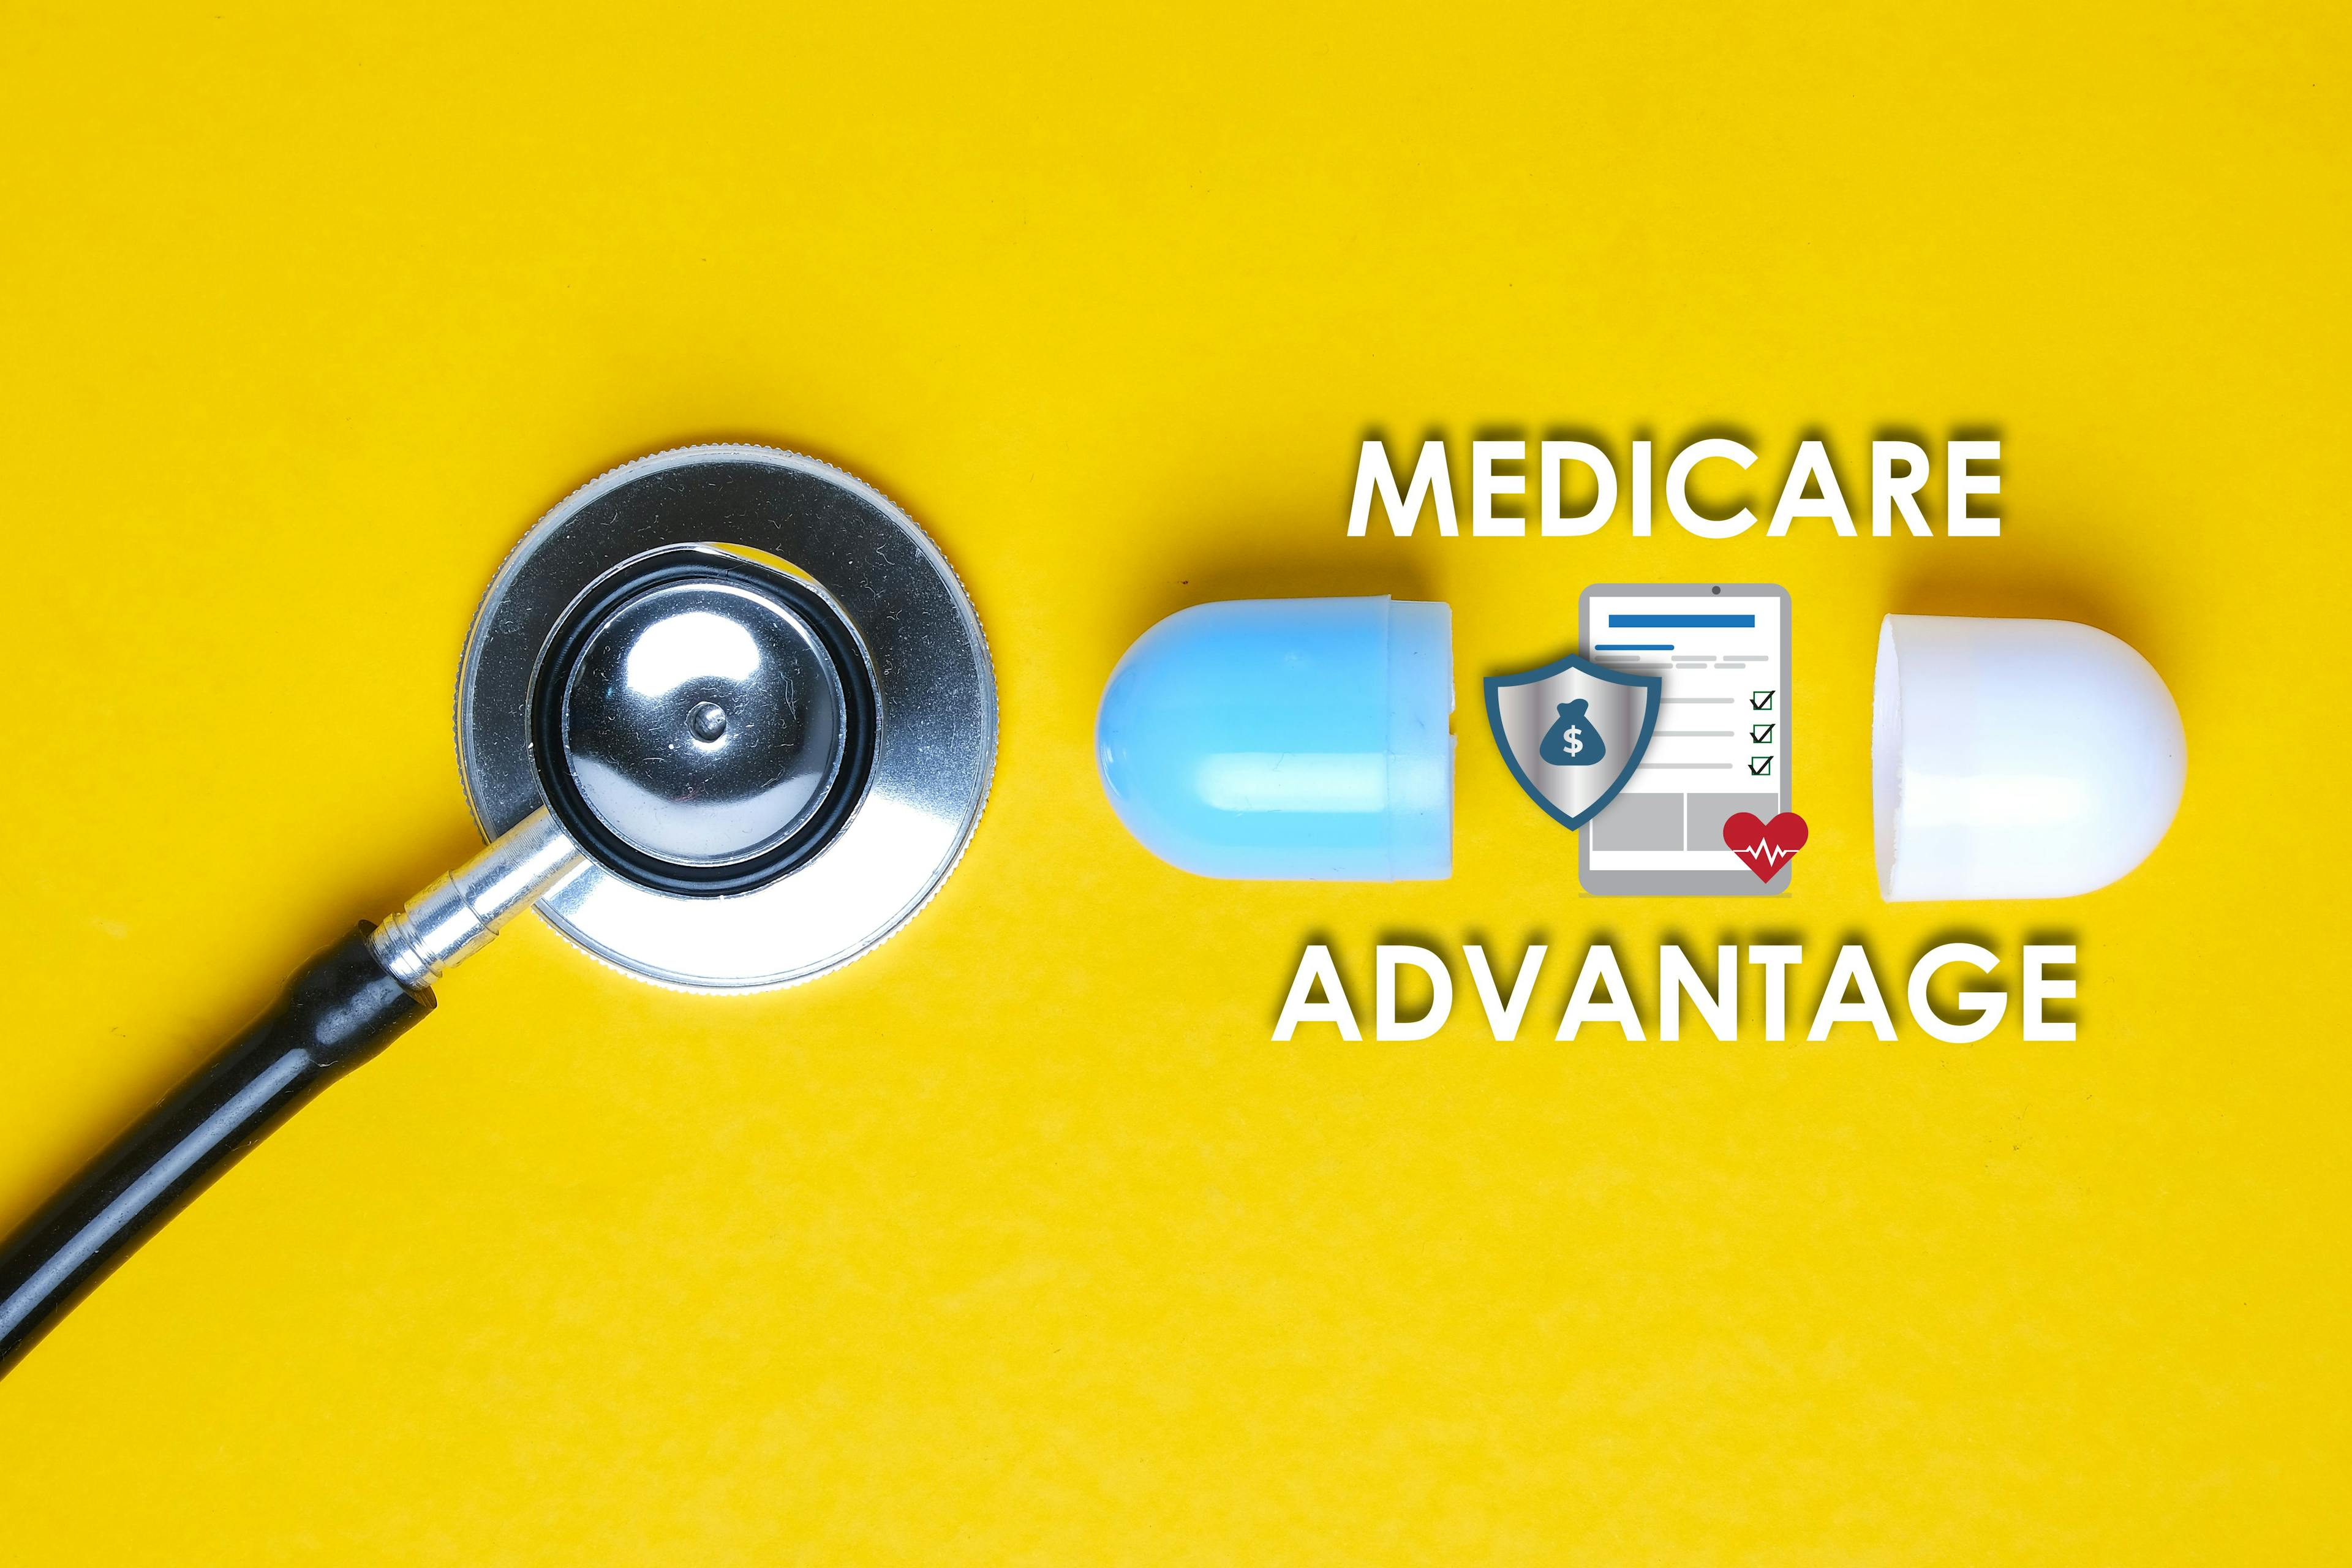 Medicare Advantage | Image credit: NajmiArif - stock.adobe.com